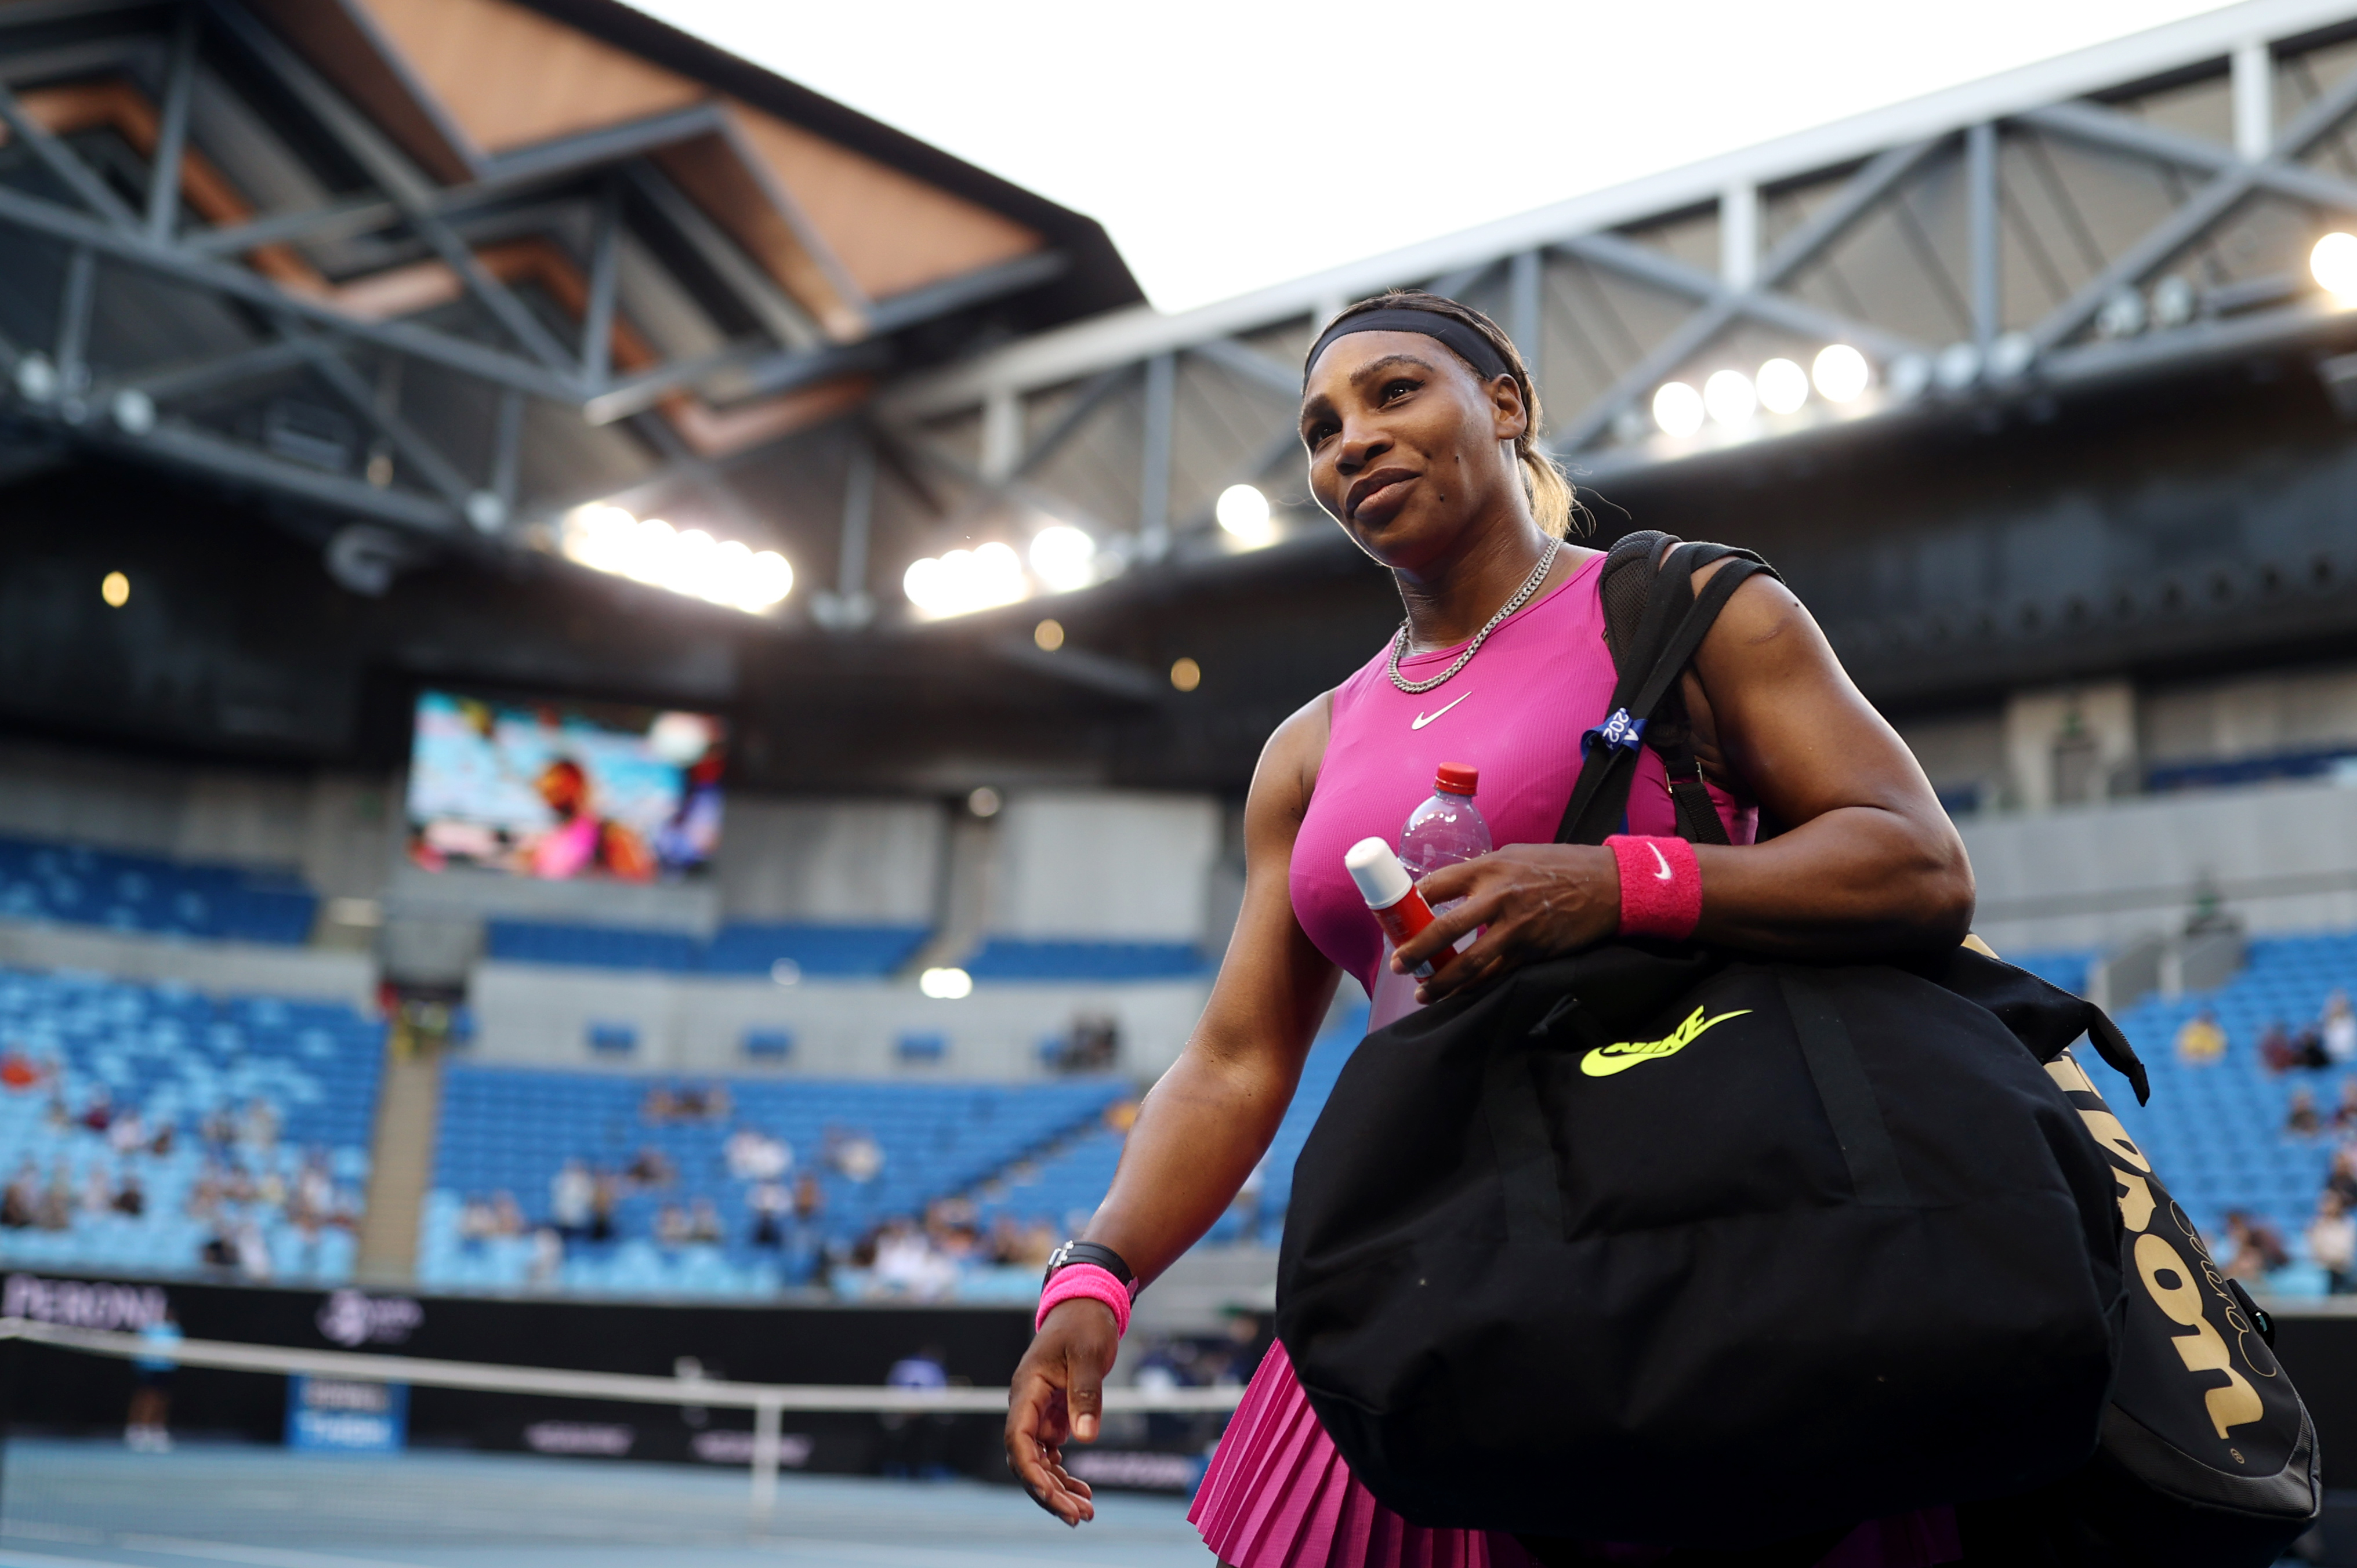 Heat, tiebreaks and Serena Williams spice up Australian Open